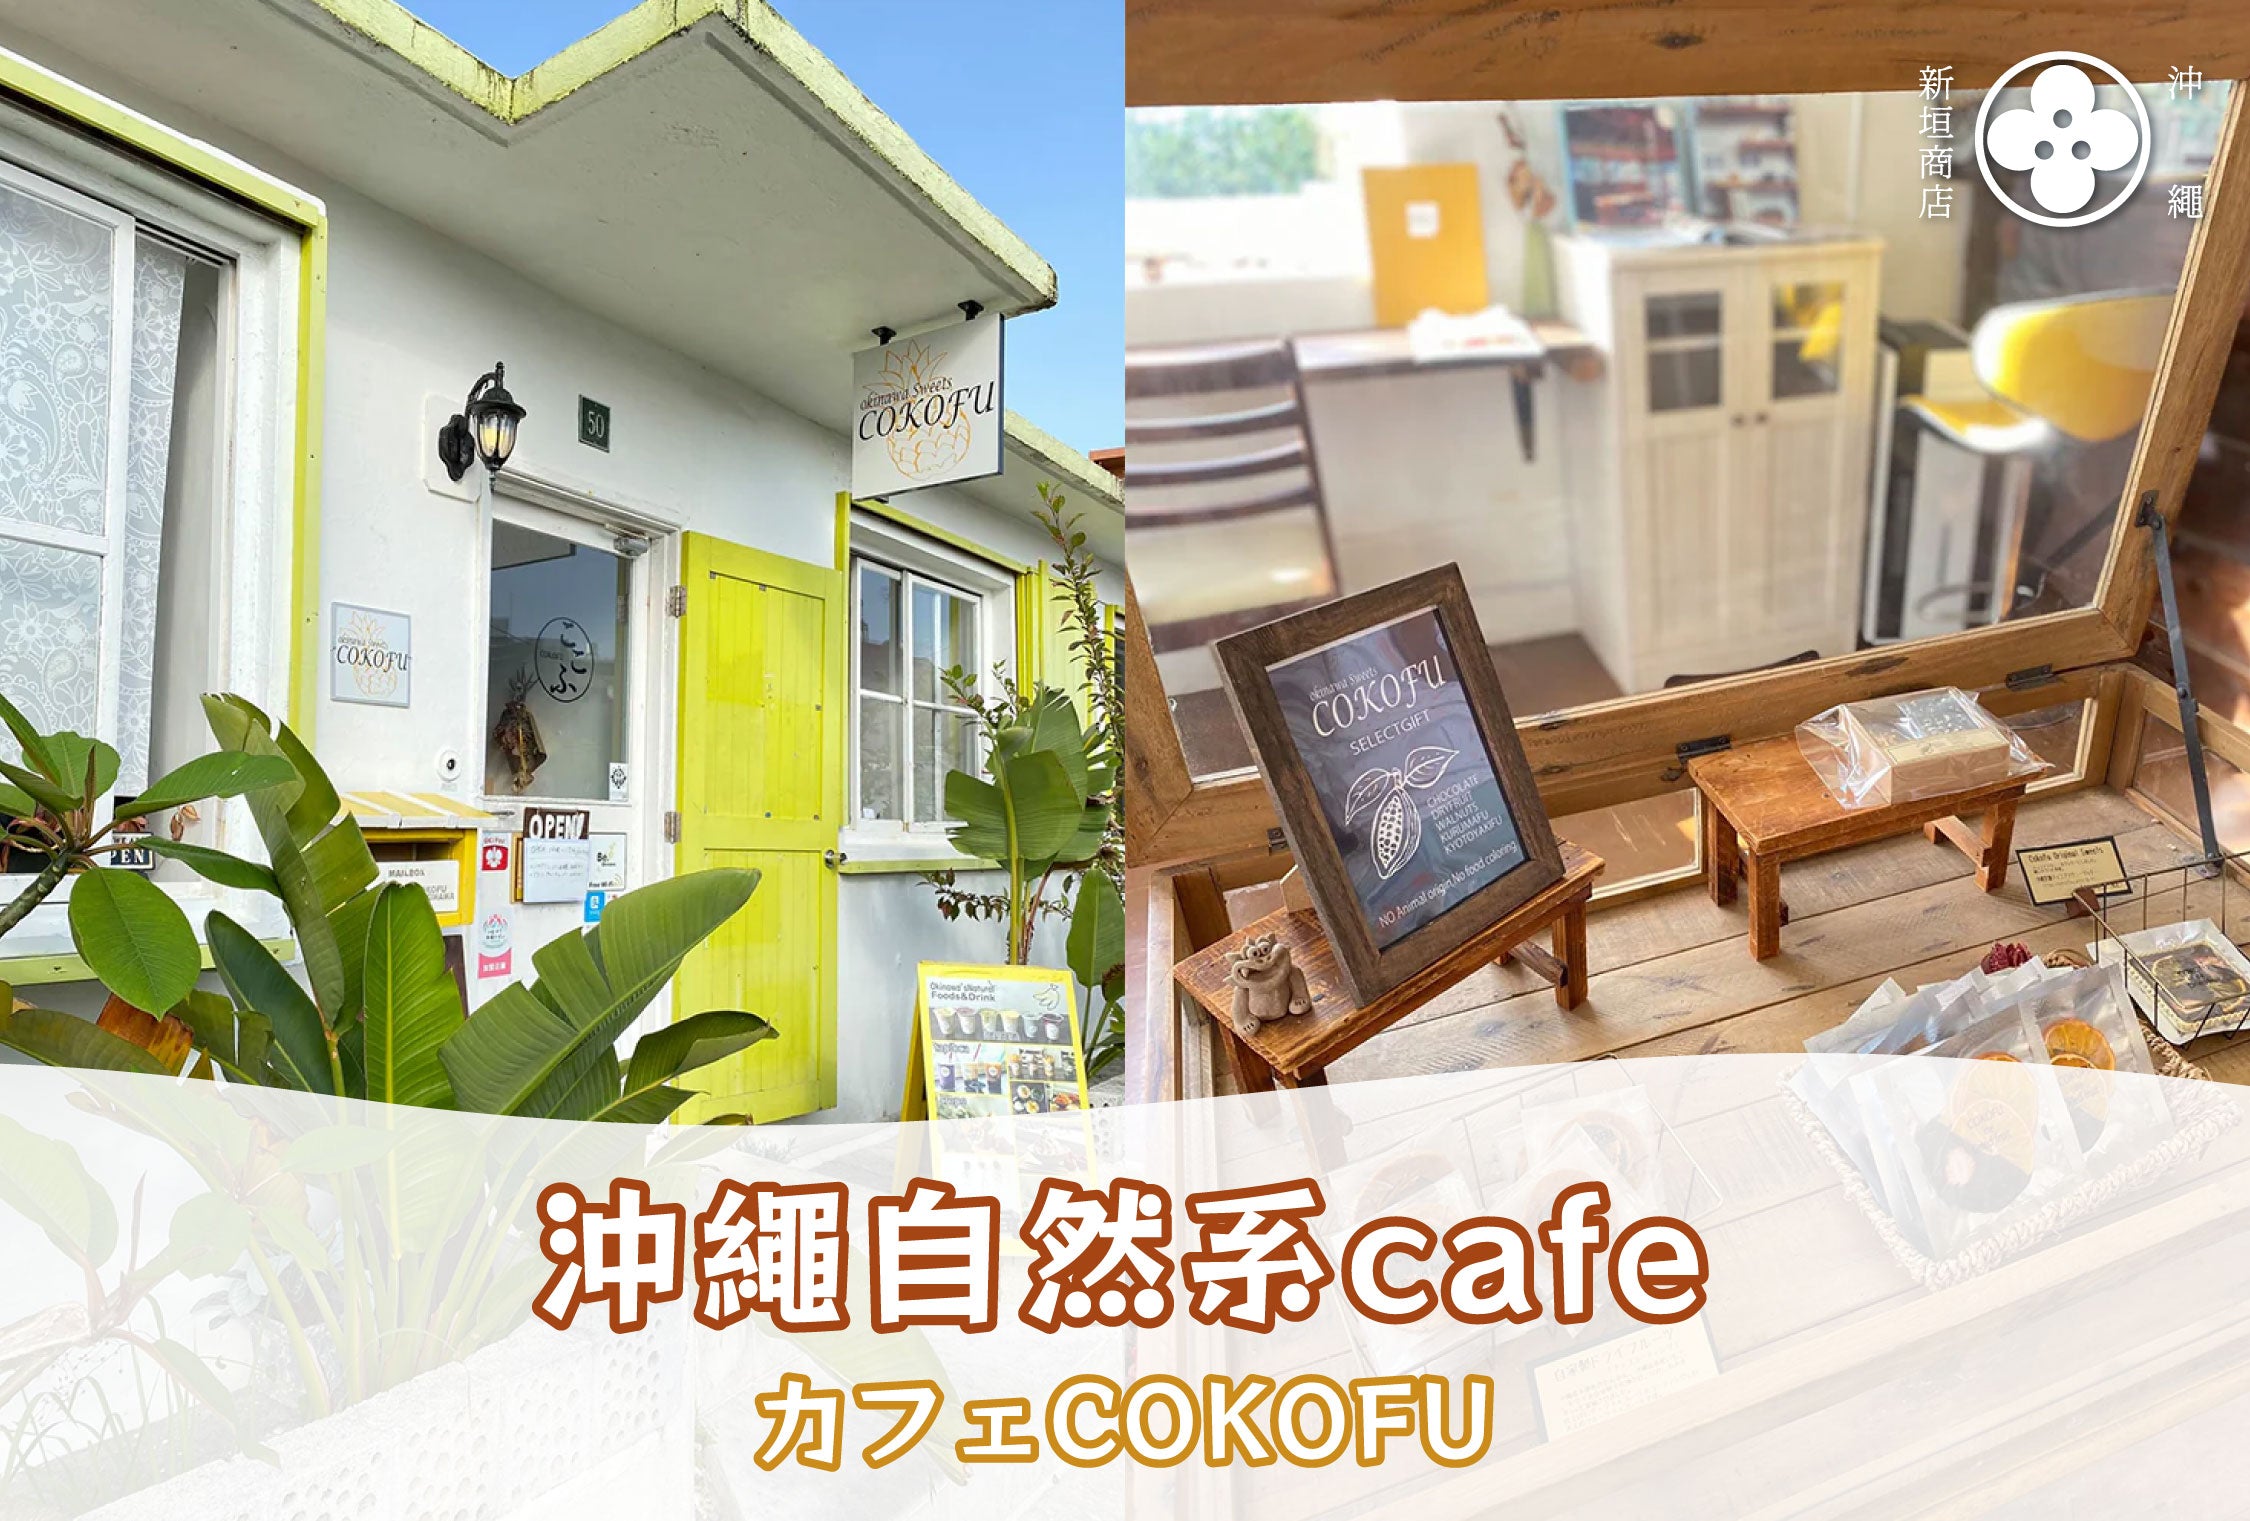 CAFE カフェCOKOFU